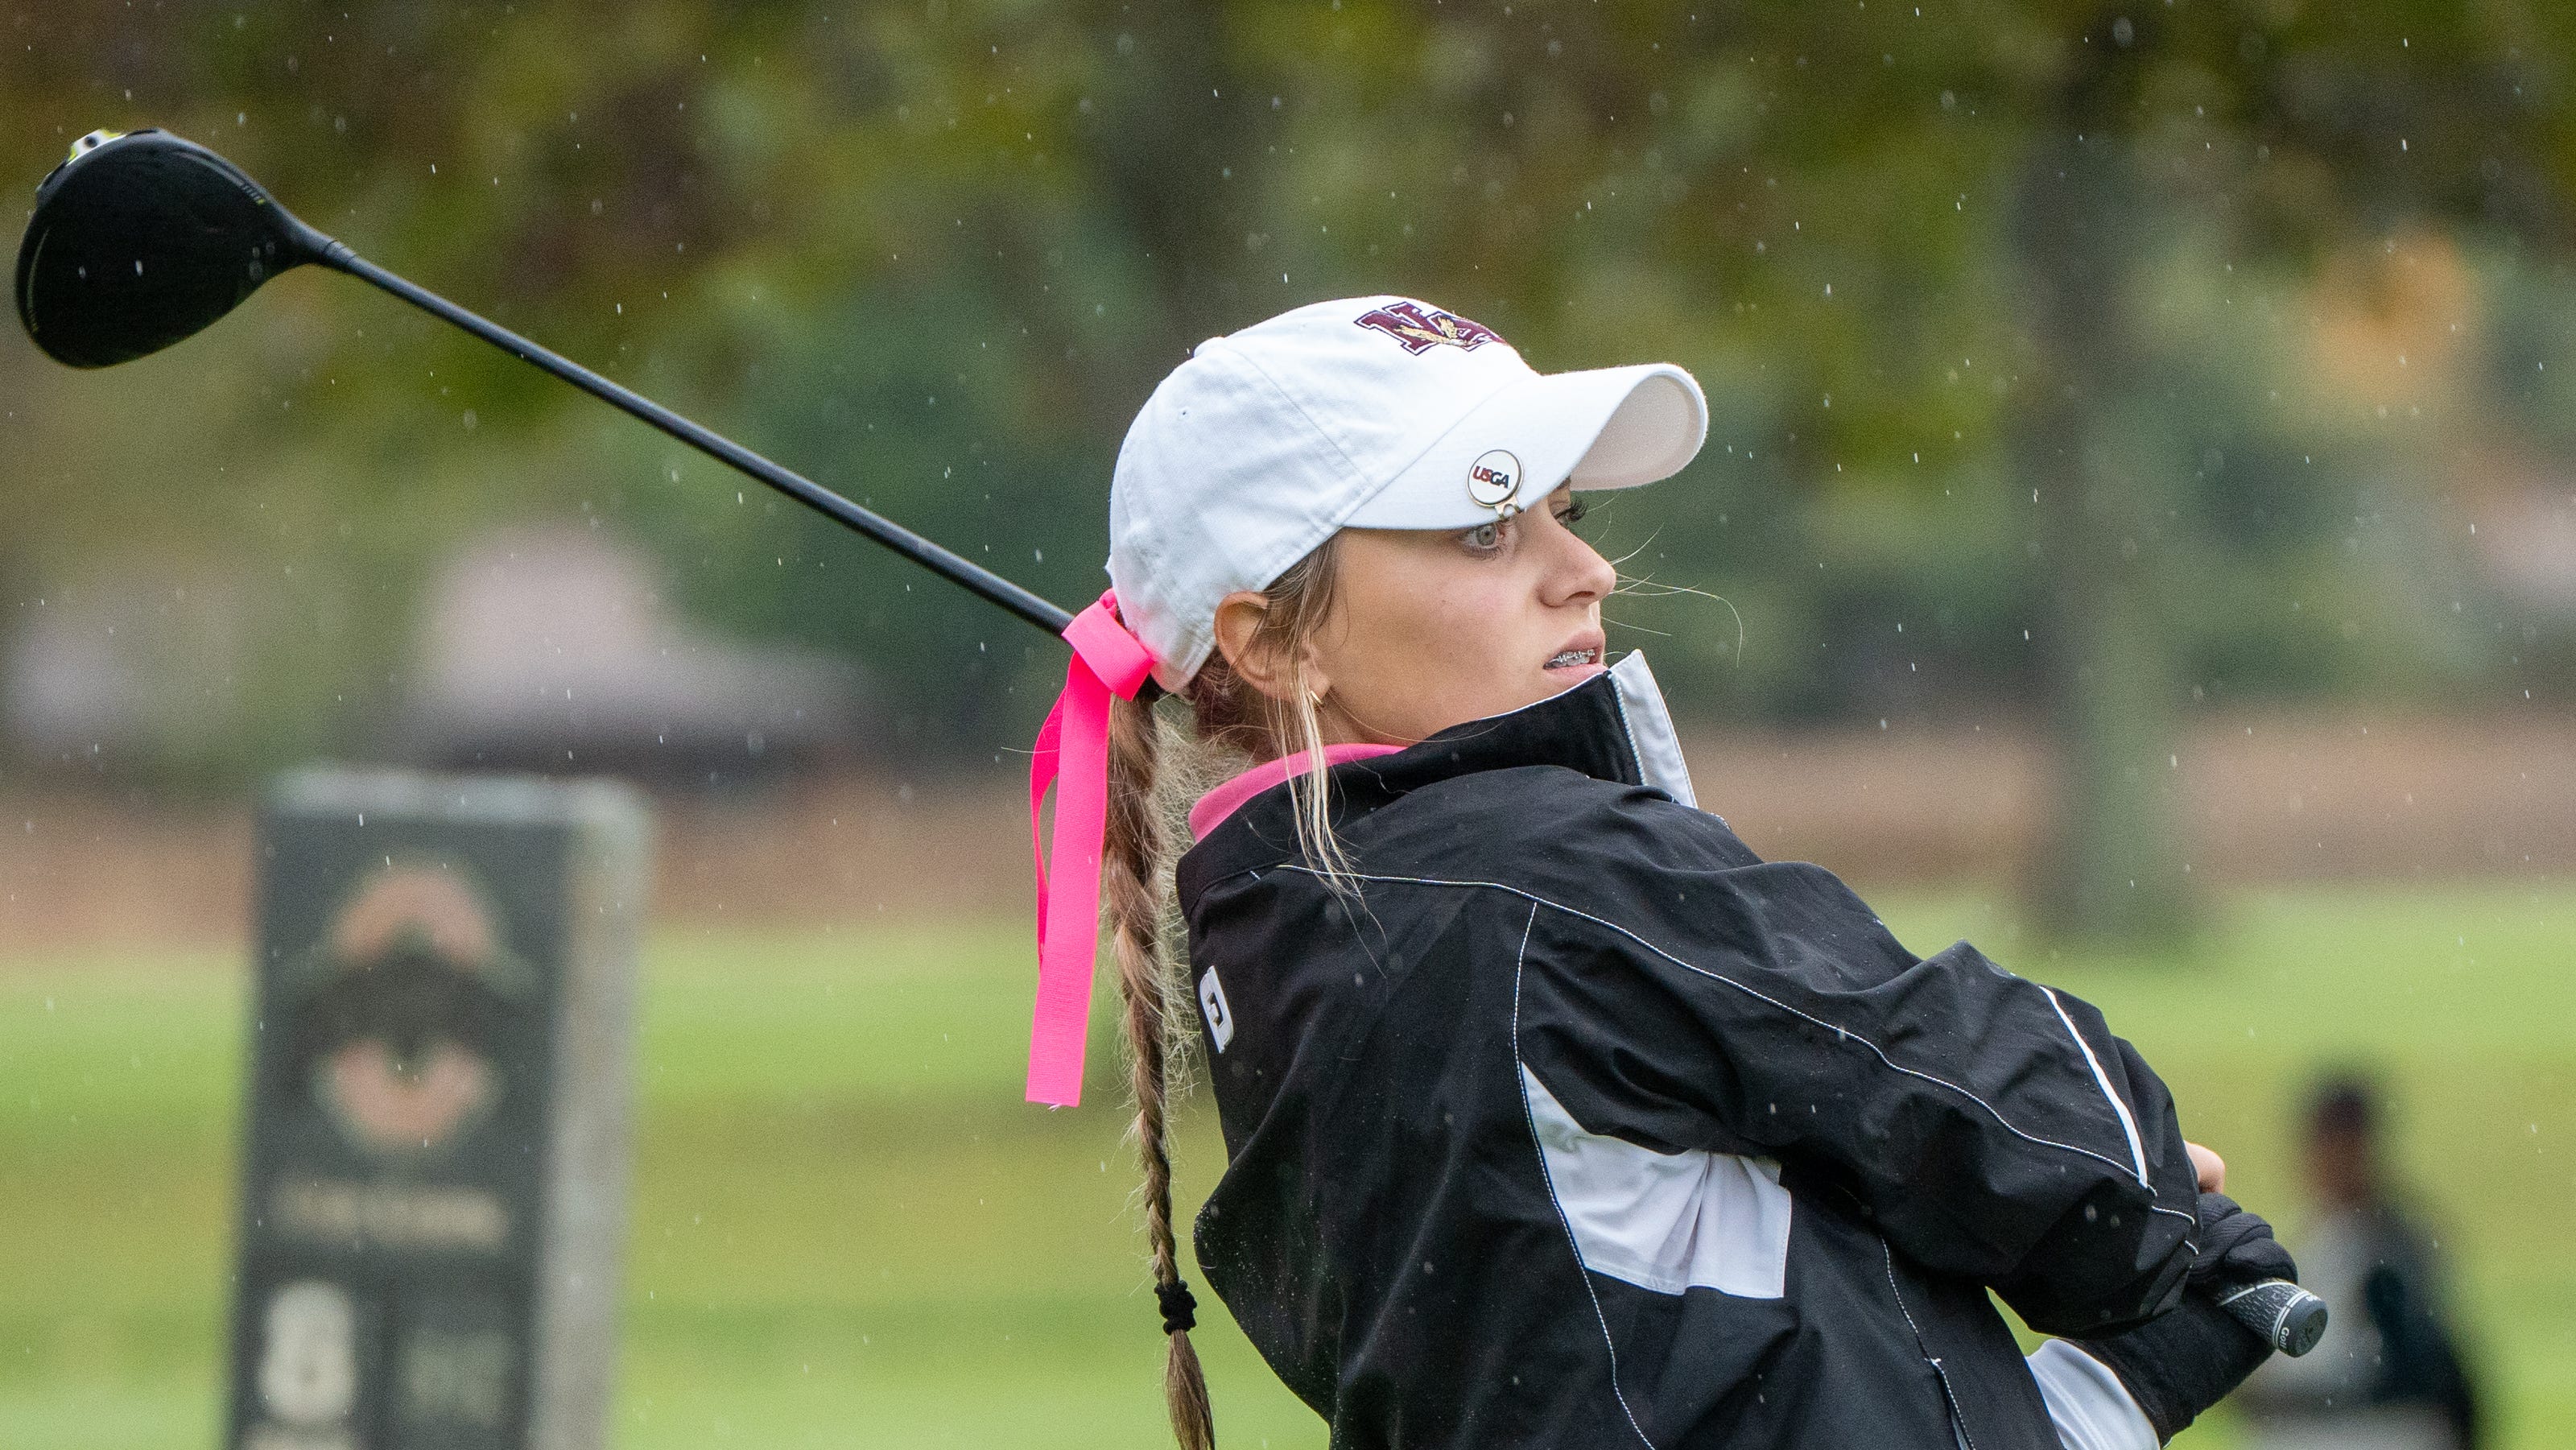   
																New Albany's Mia Hammond named to inaugural U.S. national junior golf team by USGA 
															 